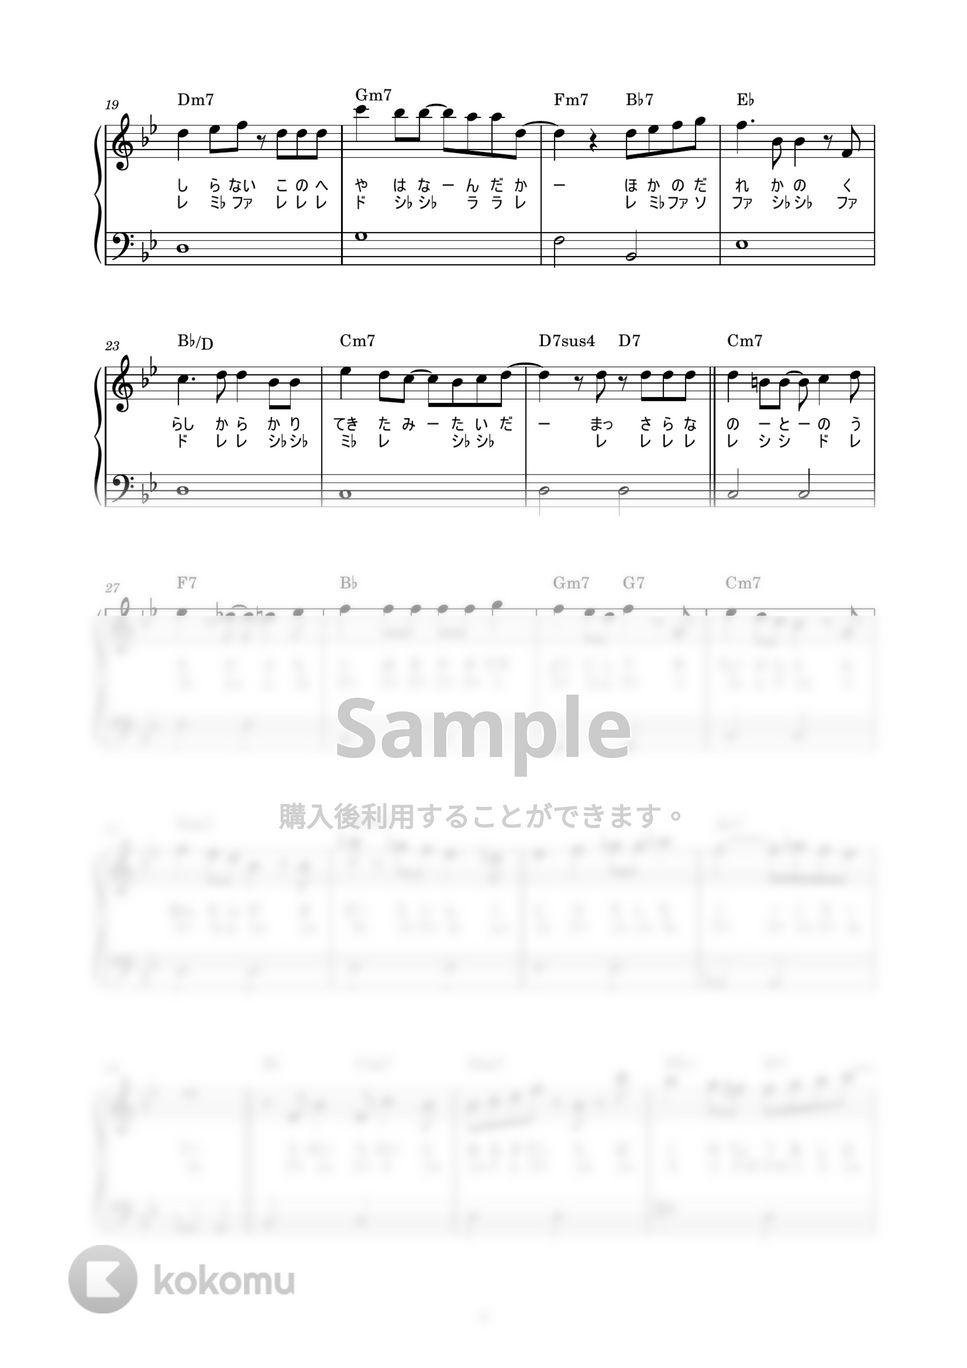 Official髭男dism - パラボラ (かんたん / 歌詞付き / ドレミ付き / 初心者) by piano.tokyo